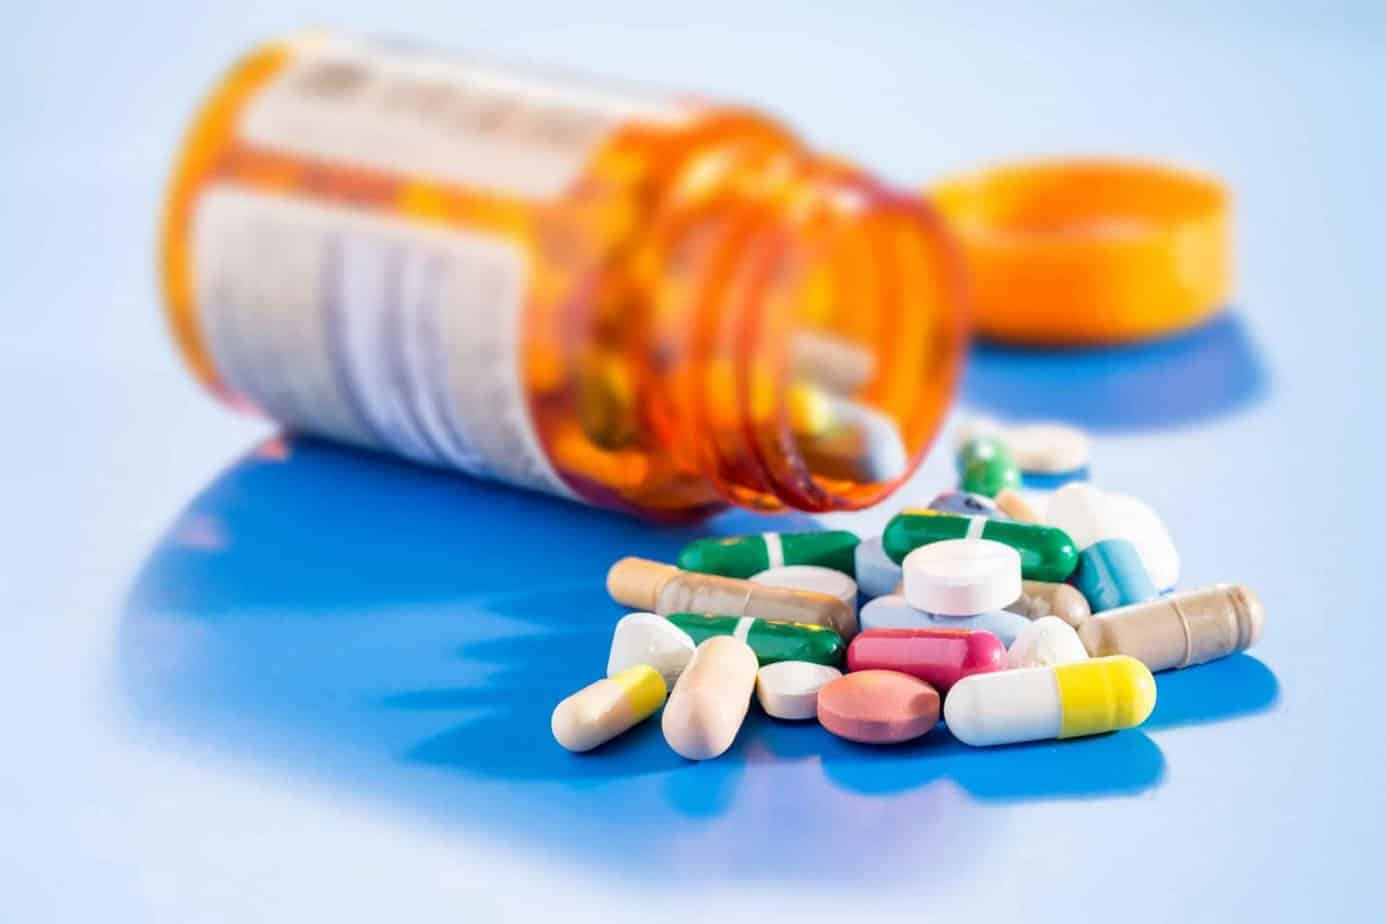 benzodiazepine-addiction-treatment